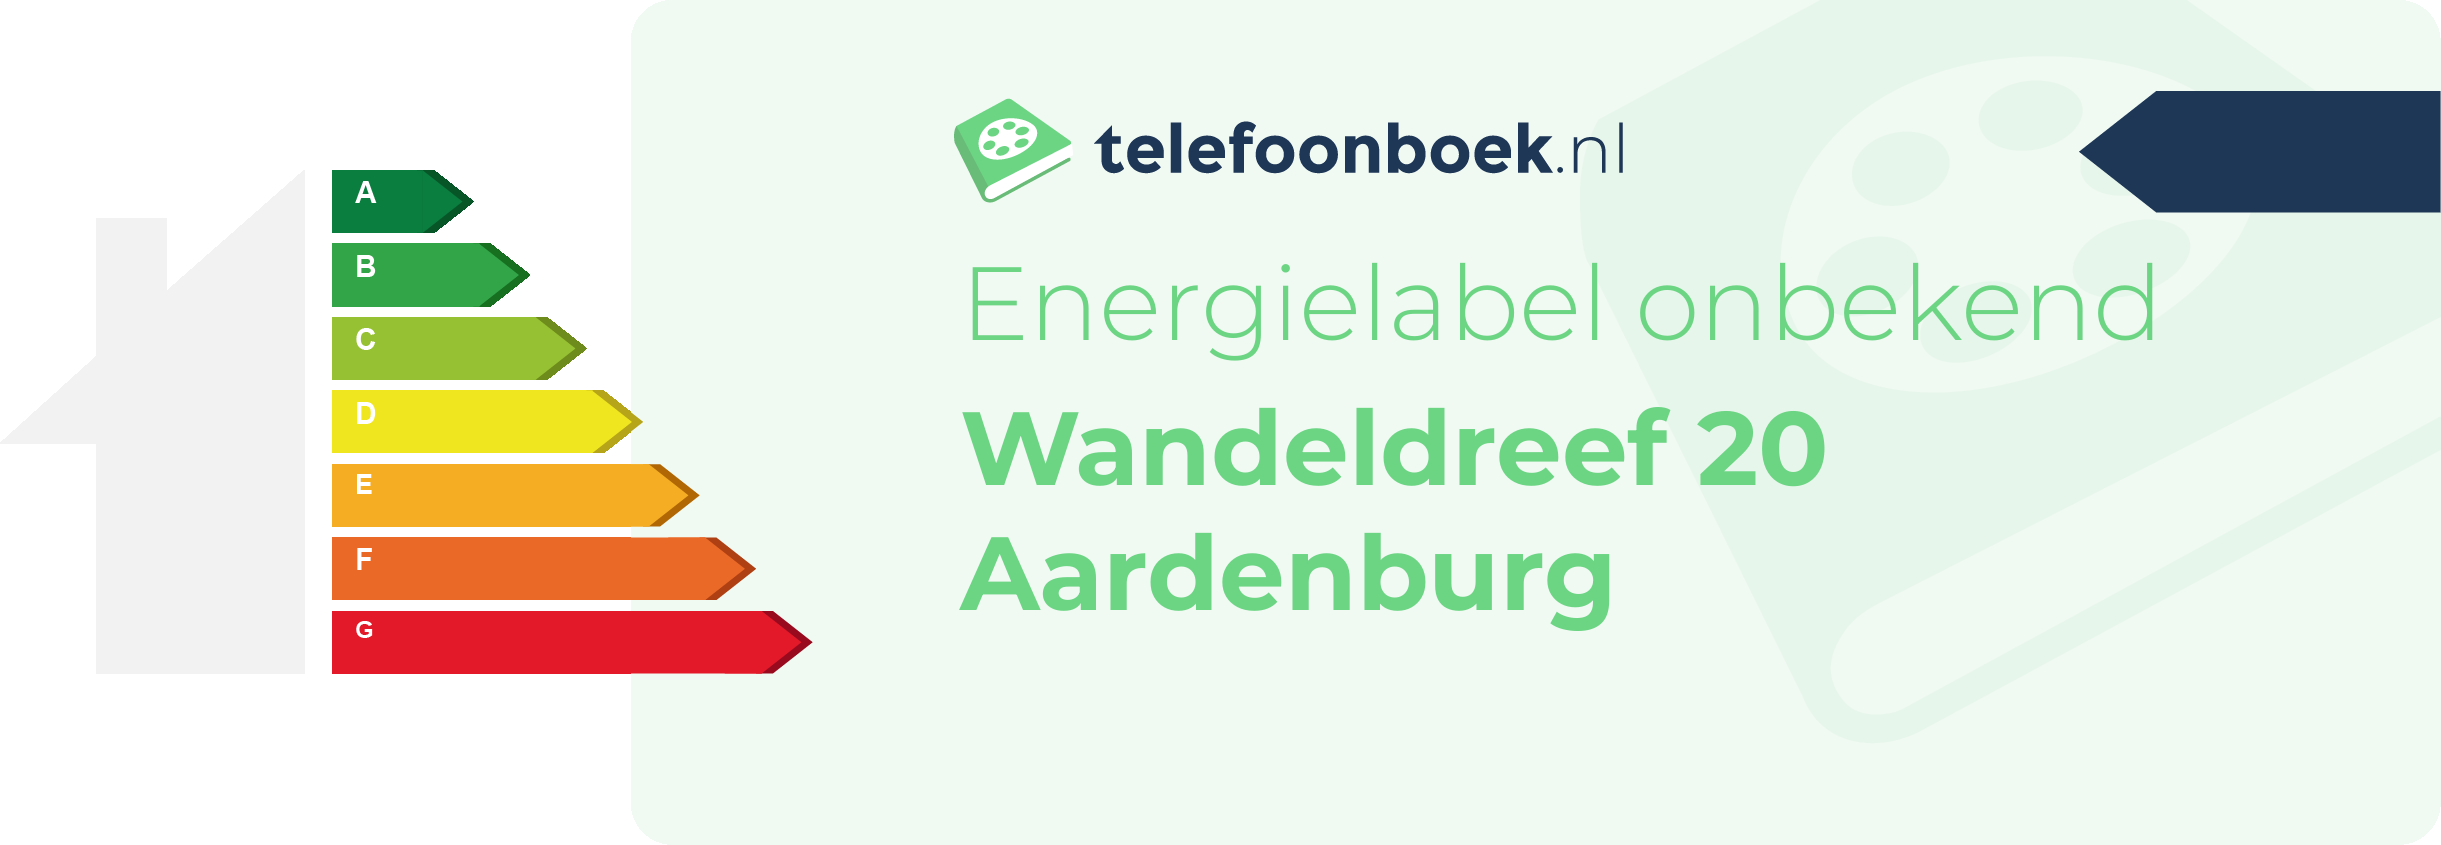 Energielabel Wandeldreef 20 Aardenburg